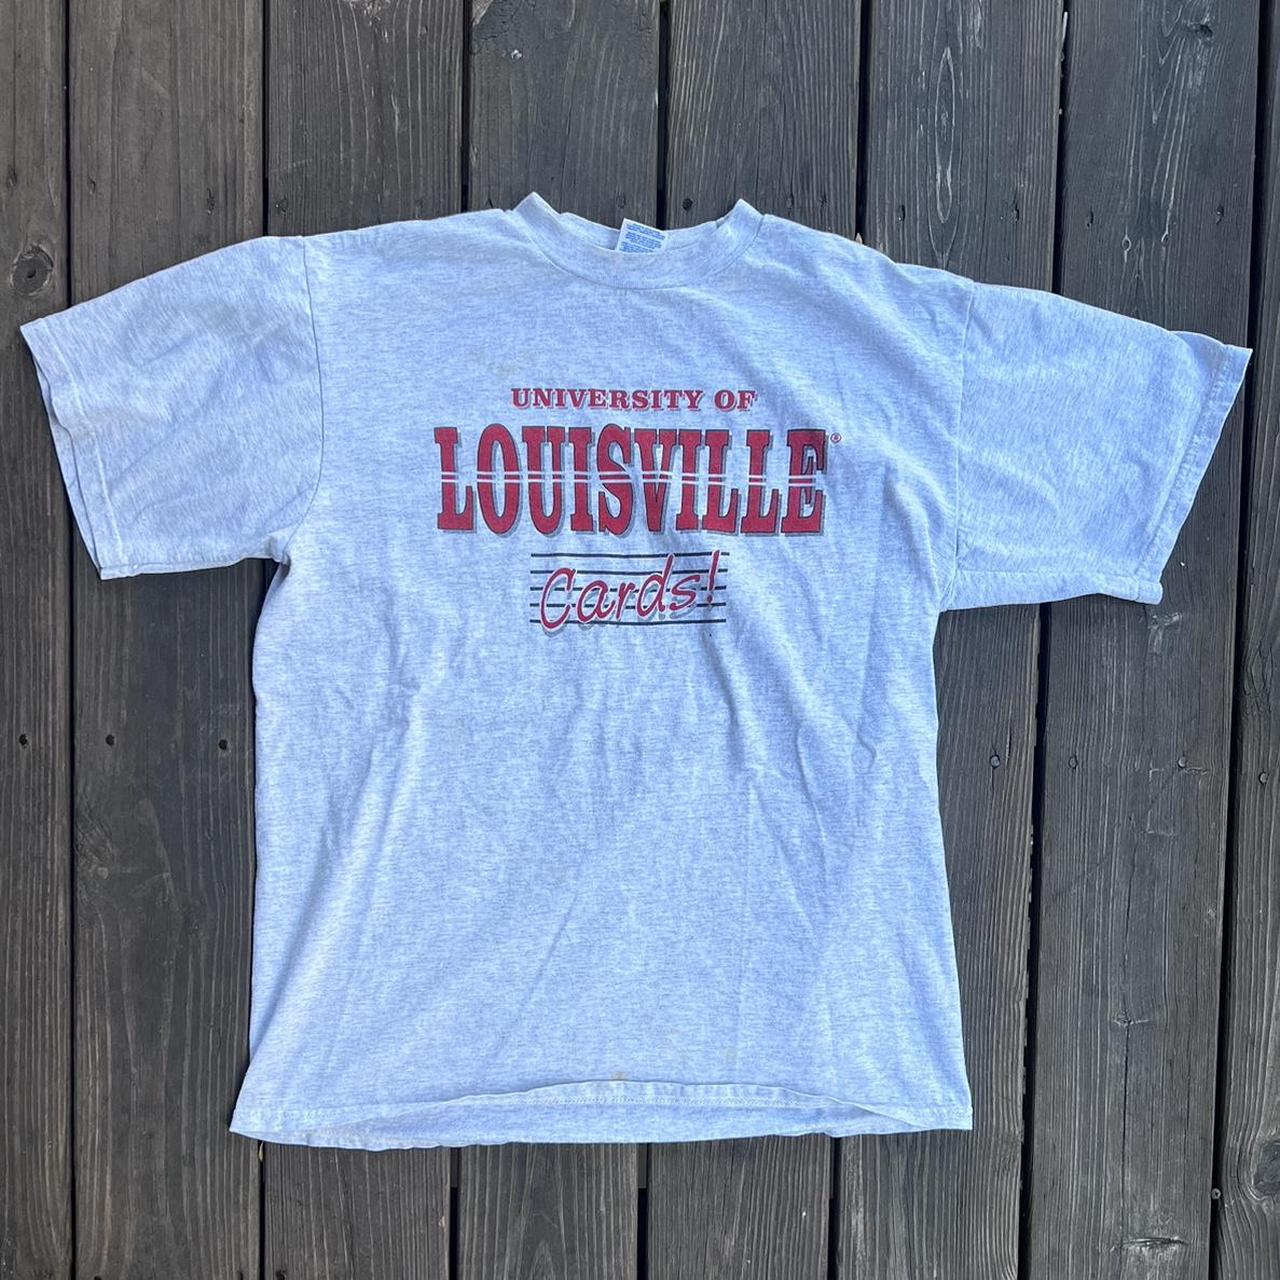 90s University of Louisville Cardinals Sweatshirt Size Large 